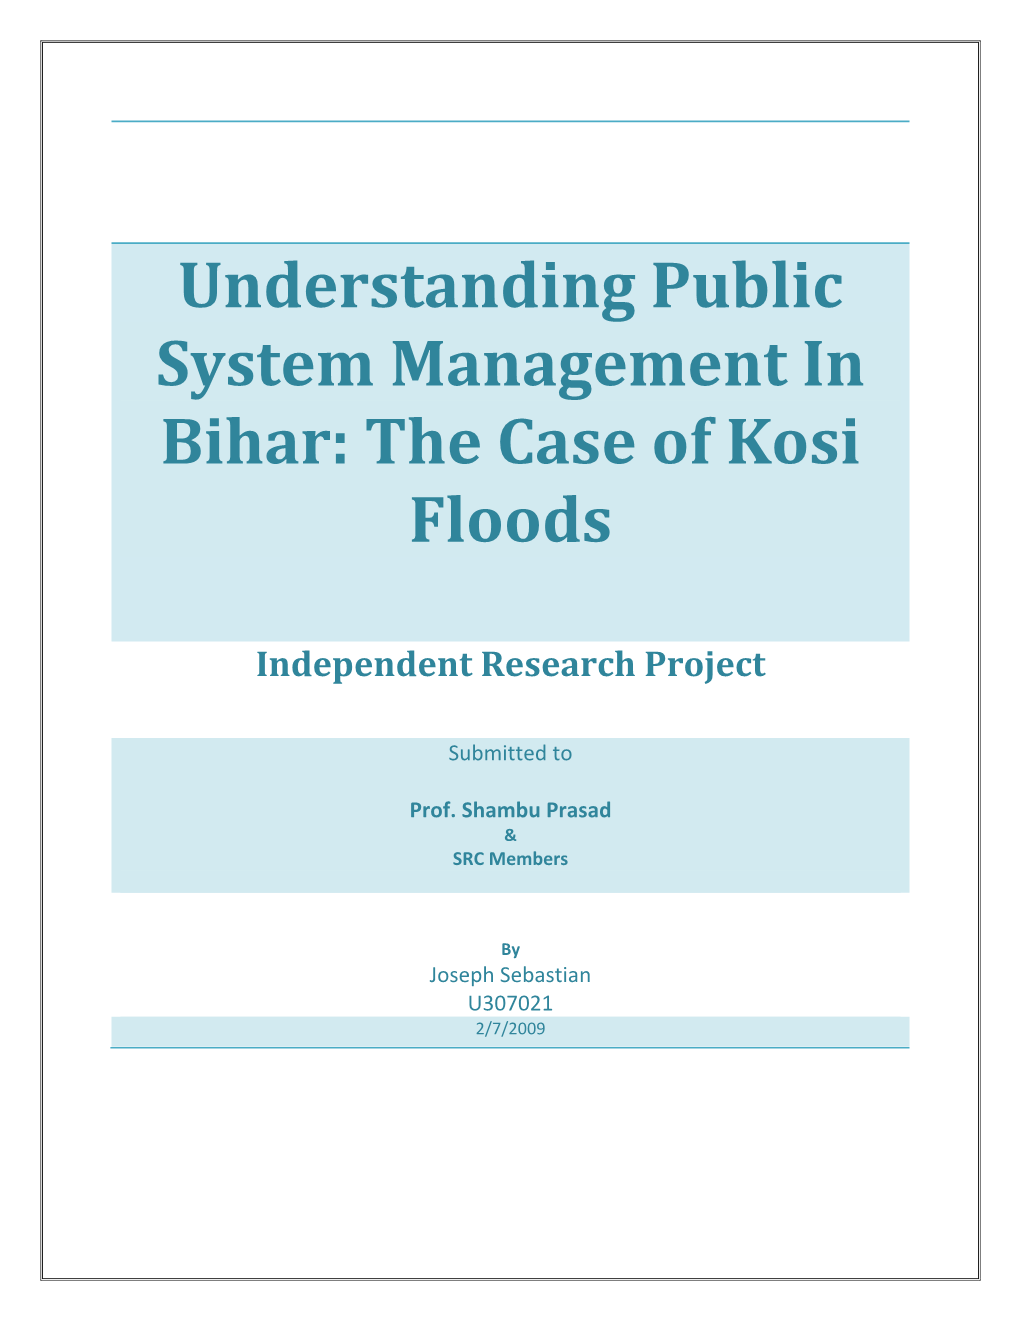 The Case of Kosi Floods